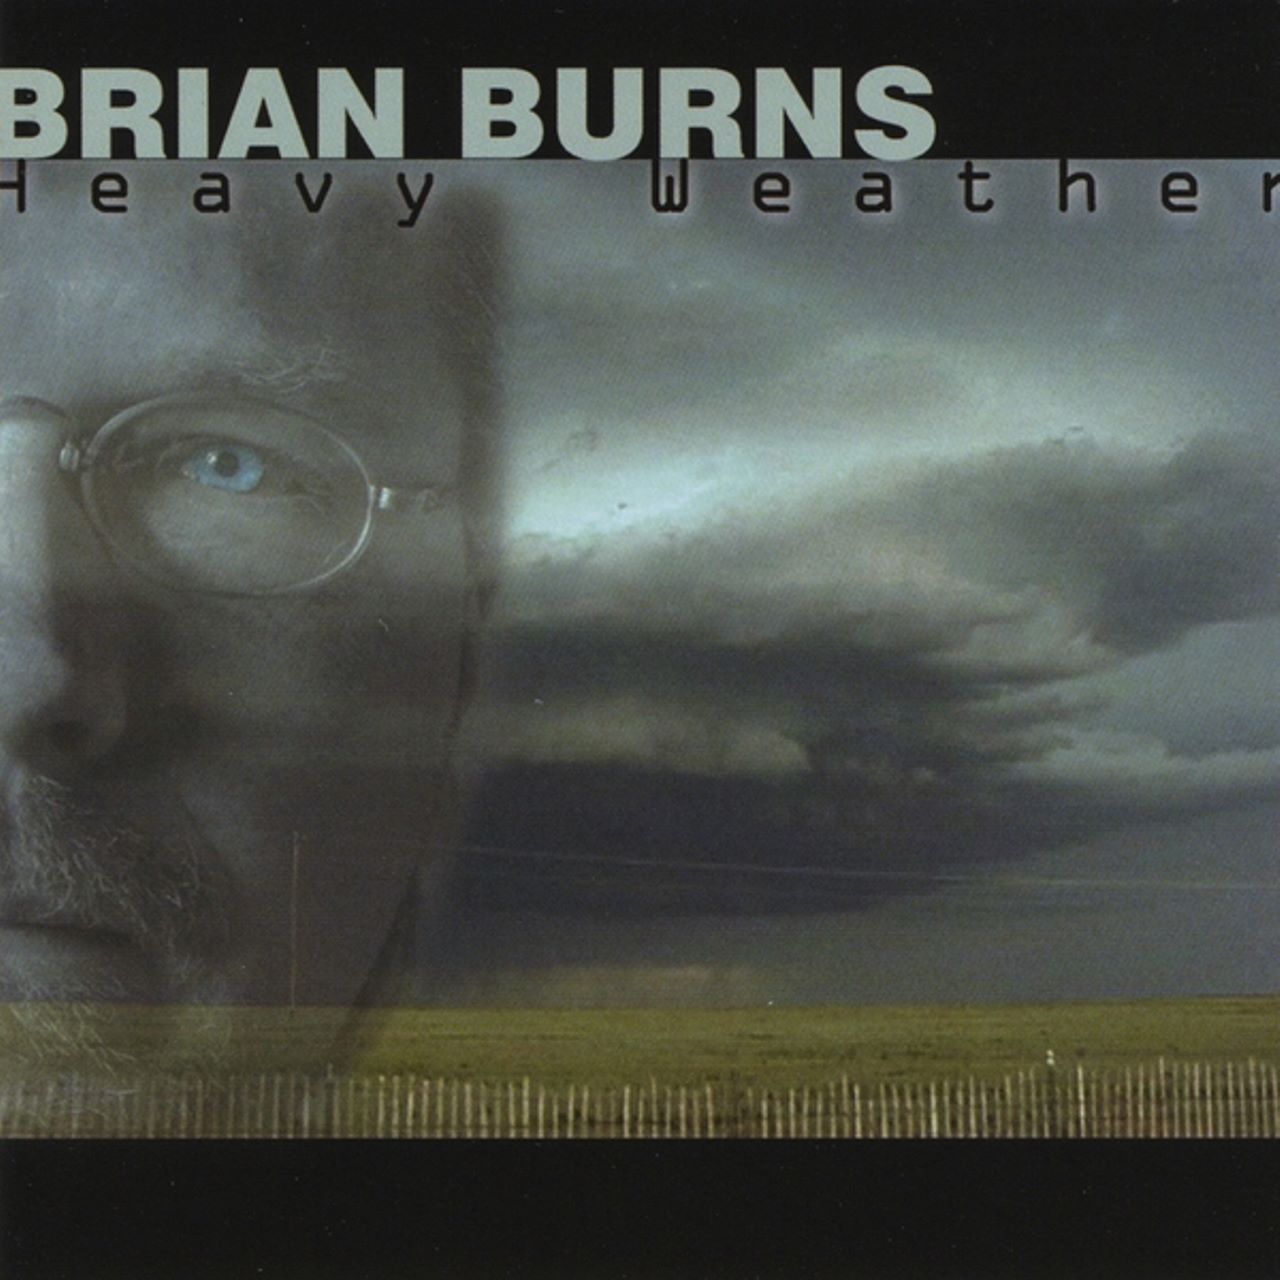 Brian Burns - Heavy Weather cover album